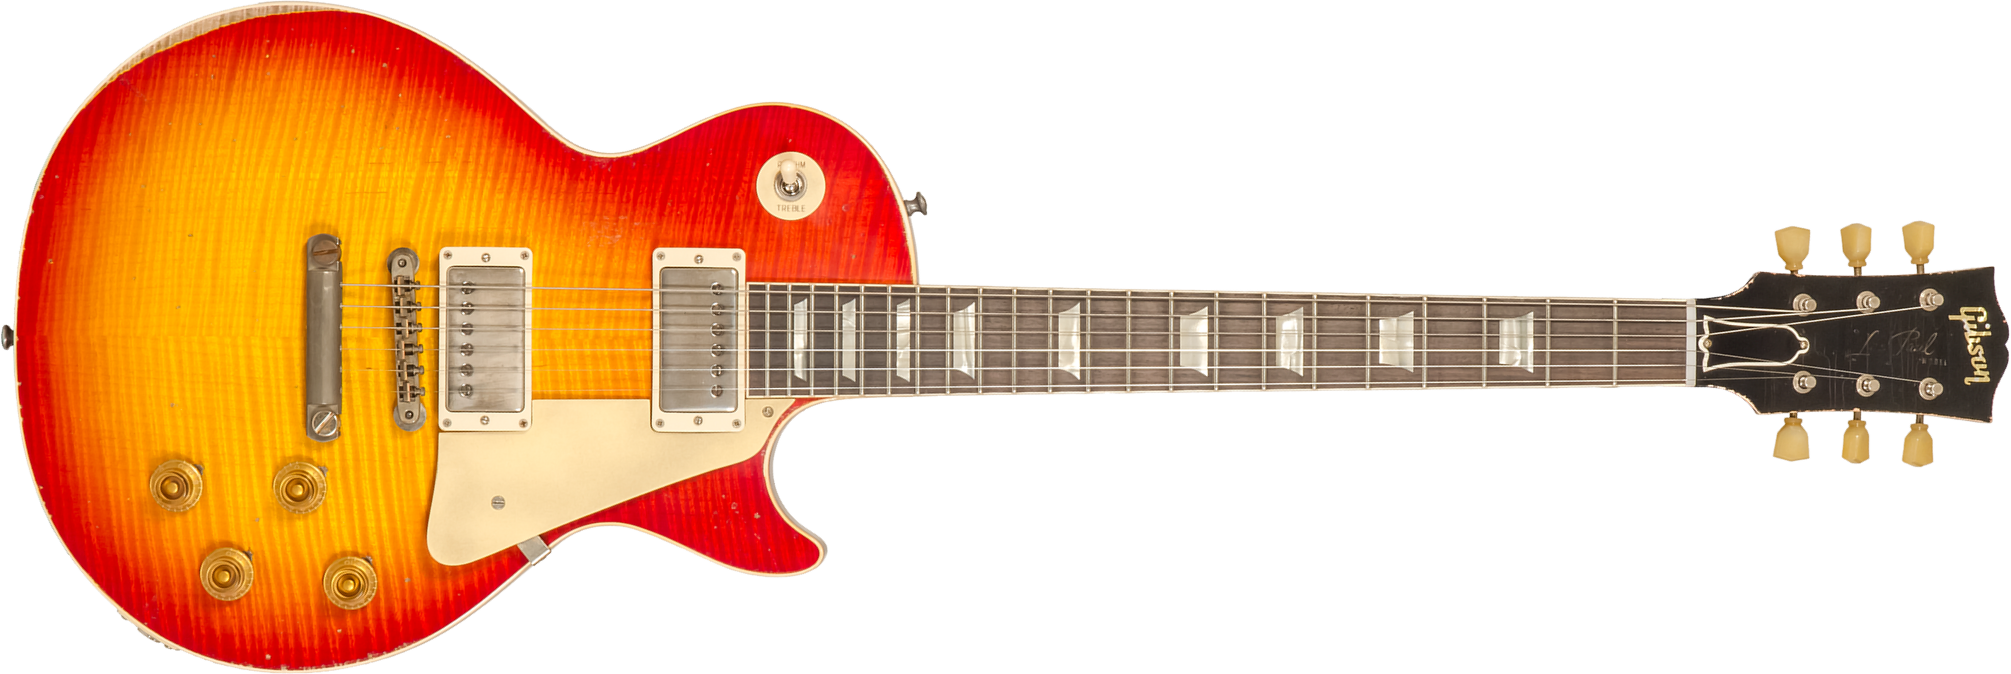 Gibson Custom Shop M2m Les Paul Standard 1959 Reissue 2h Ht Rw #934298 - Murphy Lab Ultra Heavy Aged Washed Cherry Sunburst - Enkel gesneden elektrisc